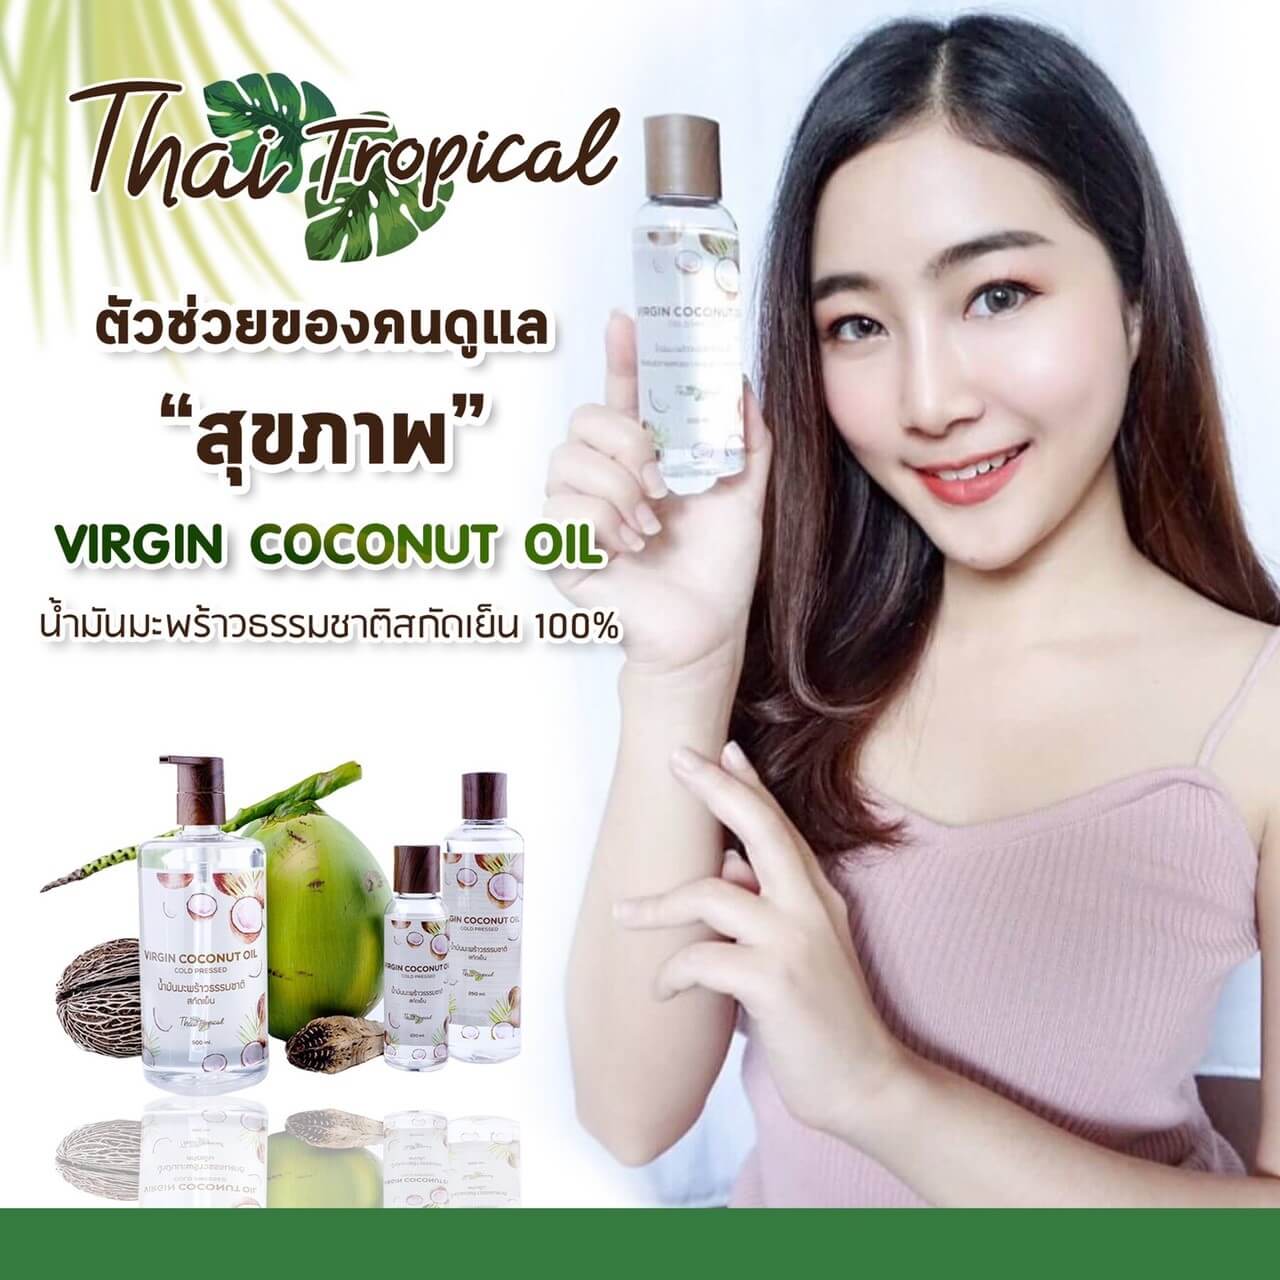 Thai tropical & siganture , Virgin coconut oil  , Thai tropical Virgin coconut oil , siganture  Virgin coconut oil 